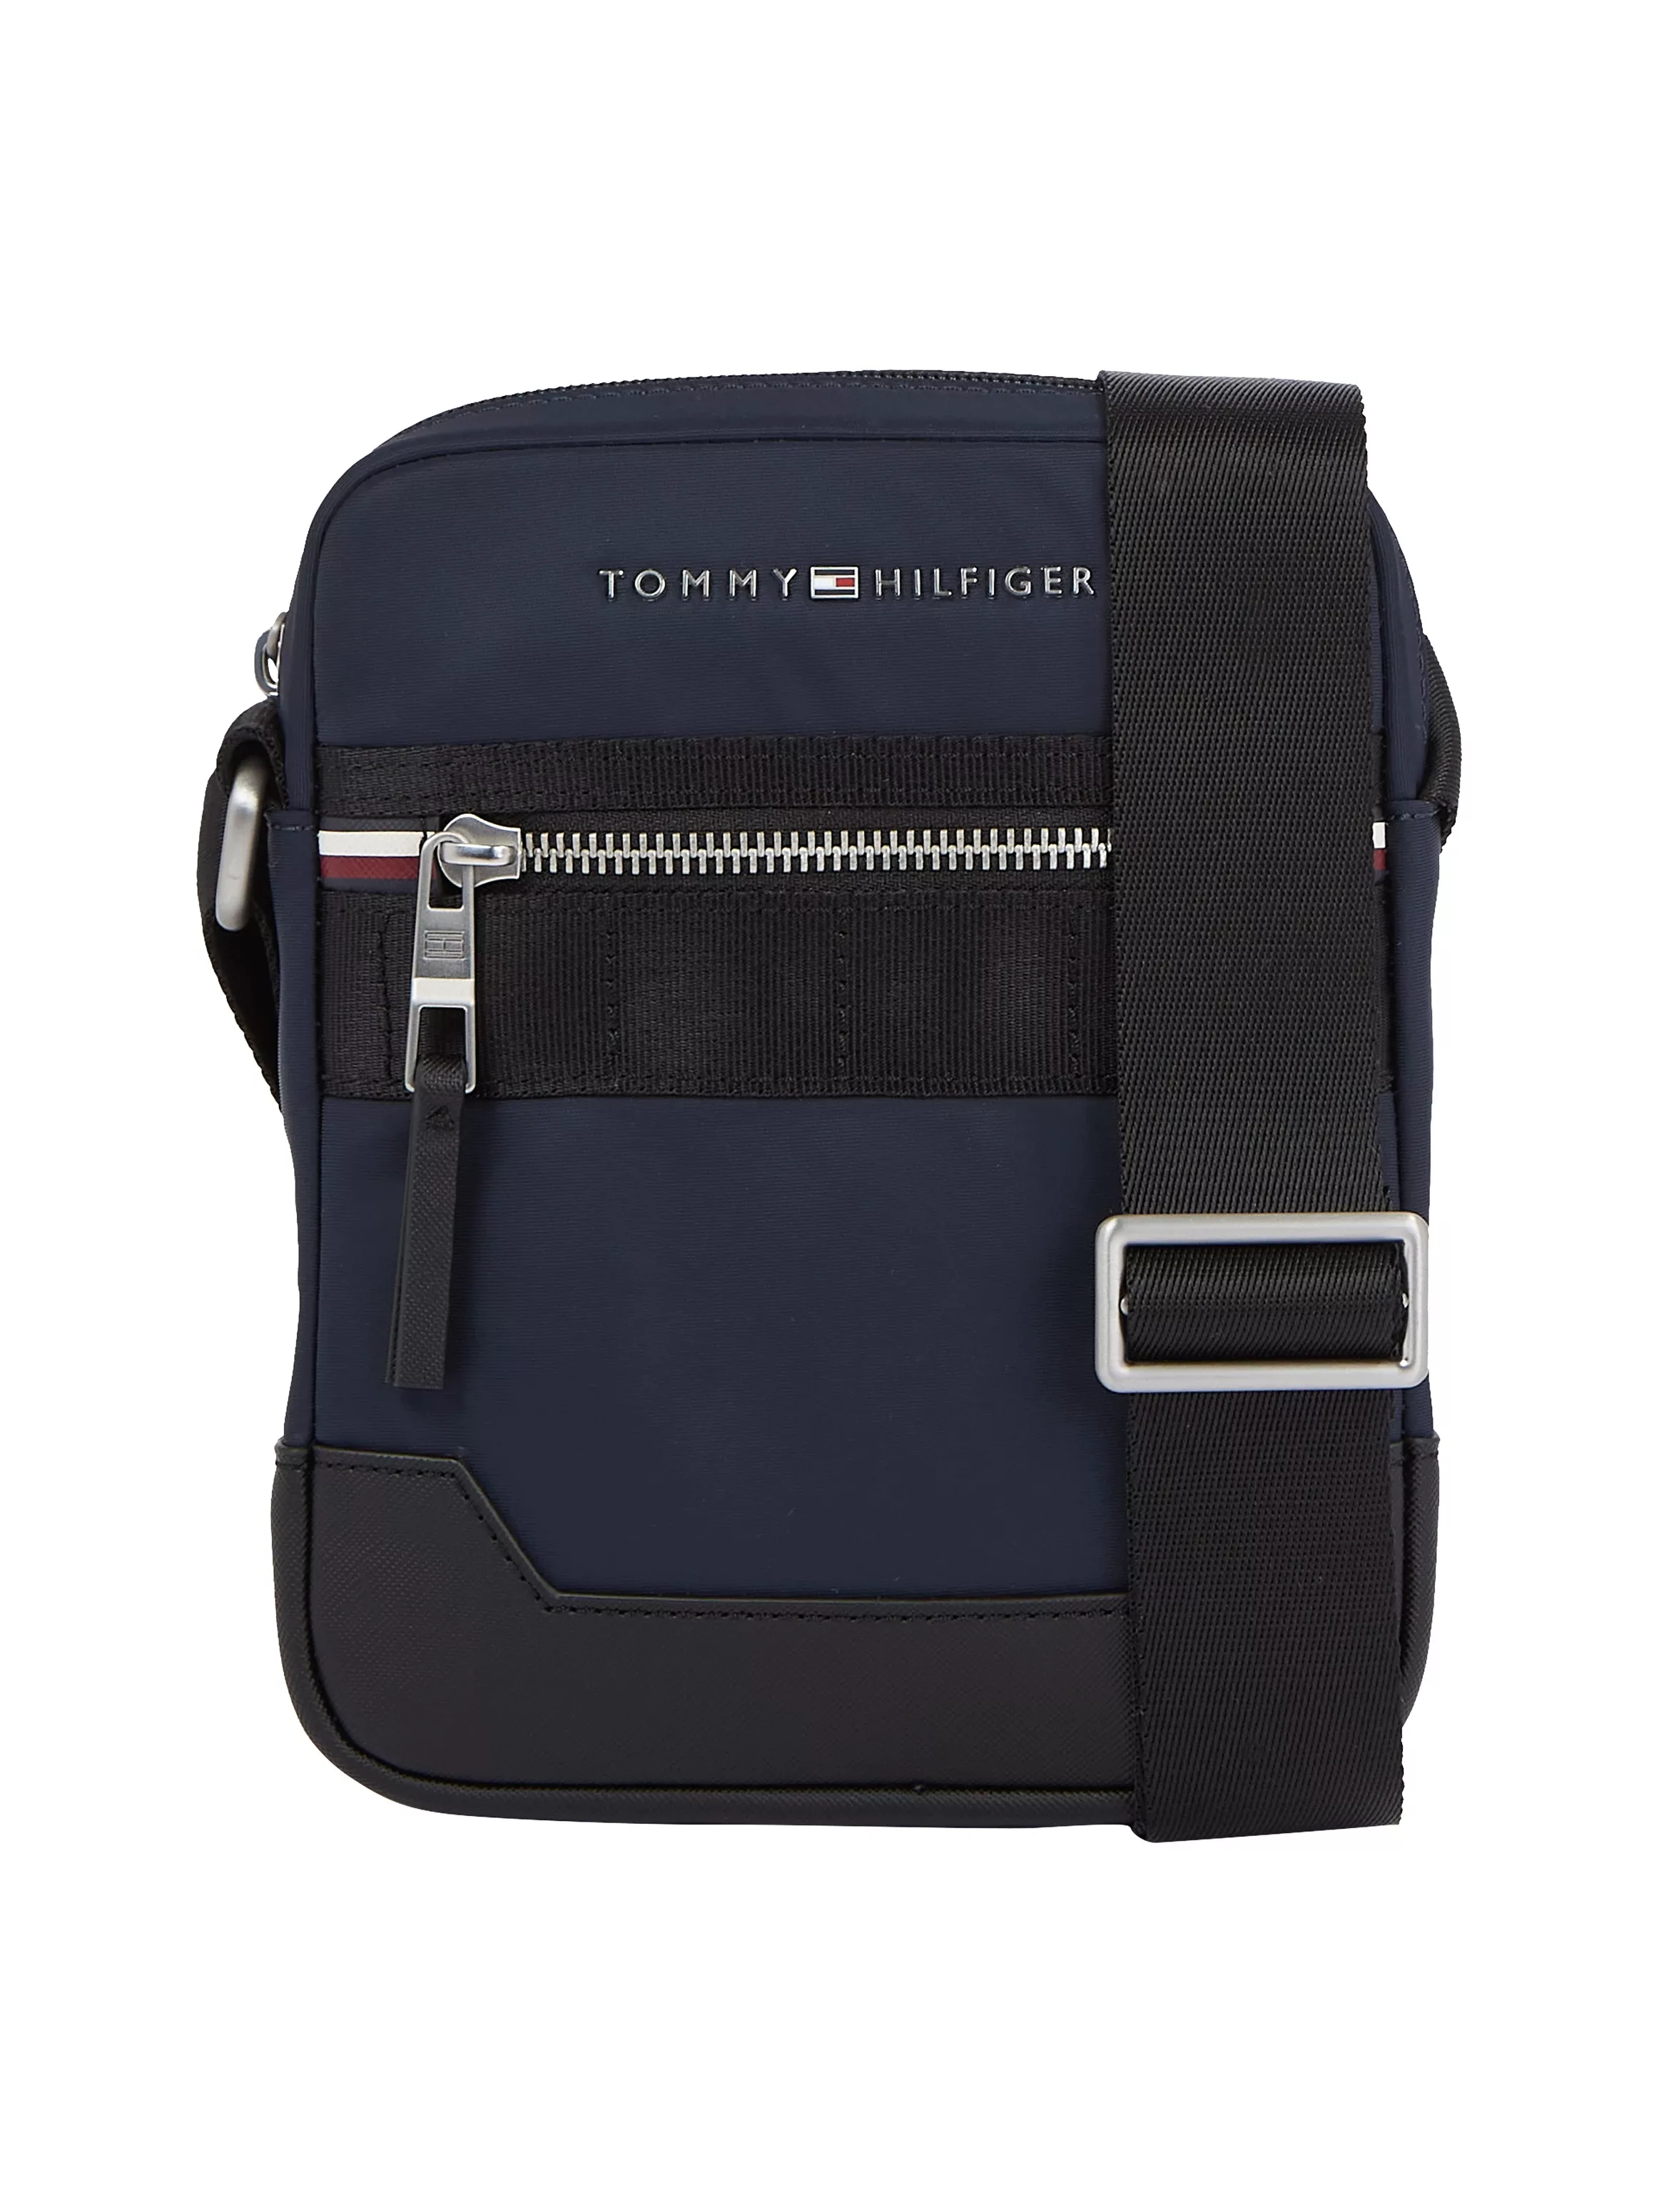 Tommy Hilfiger Mini Bag "TH ELEVATED NYLON MINI REPORTER", Herrenschulterta günstig online kaufen